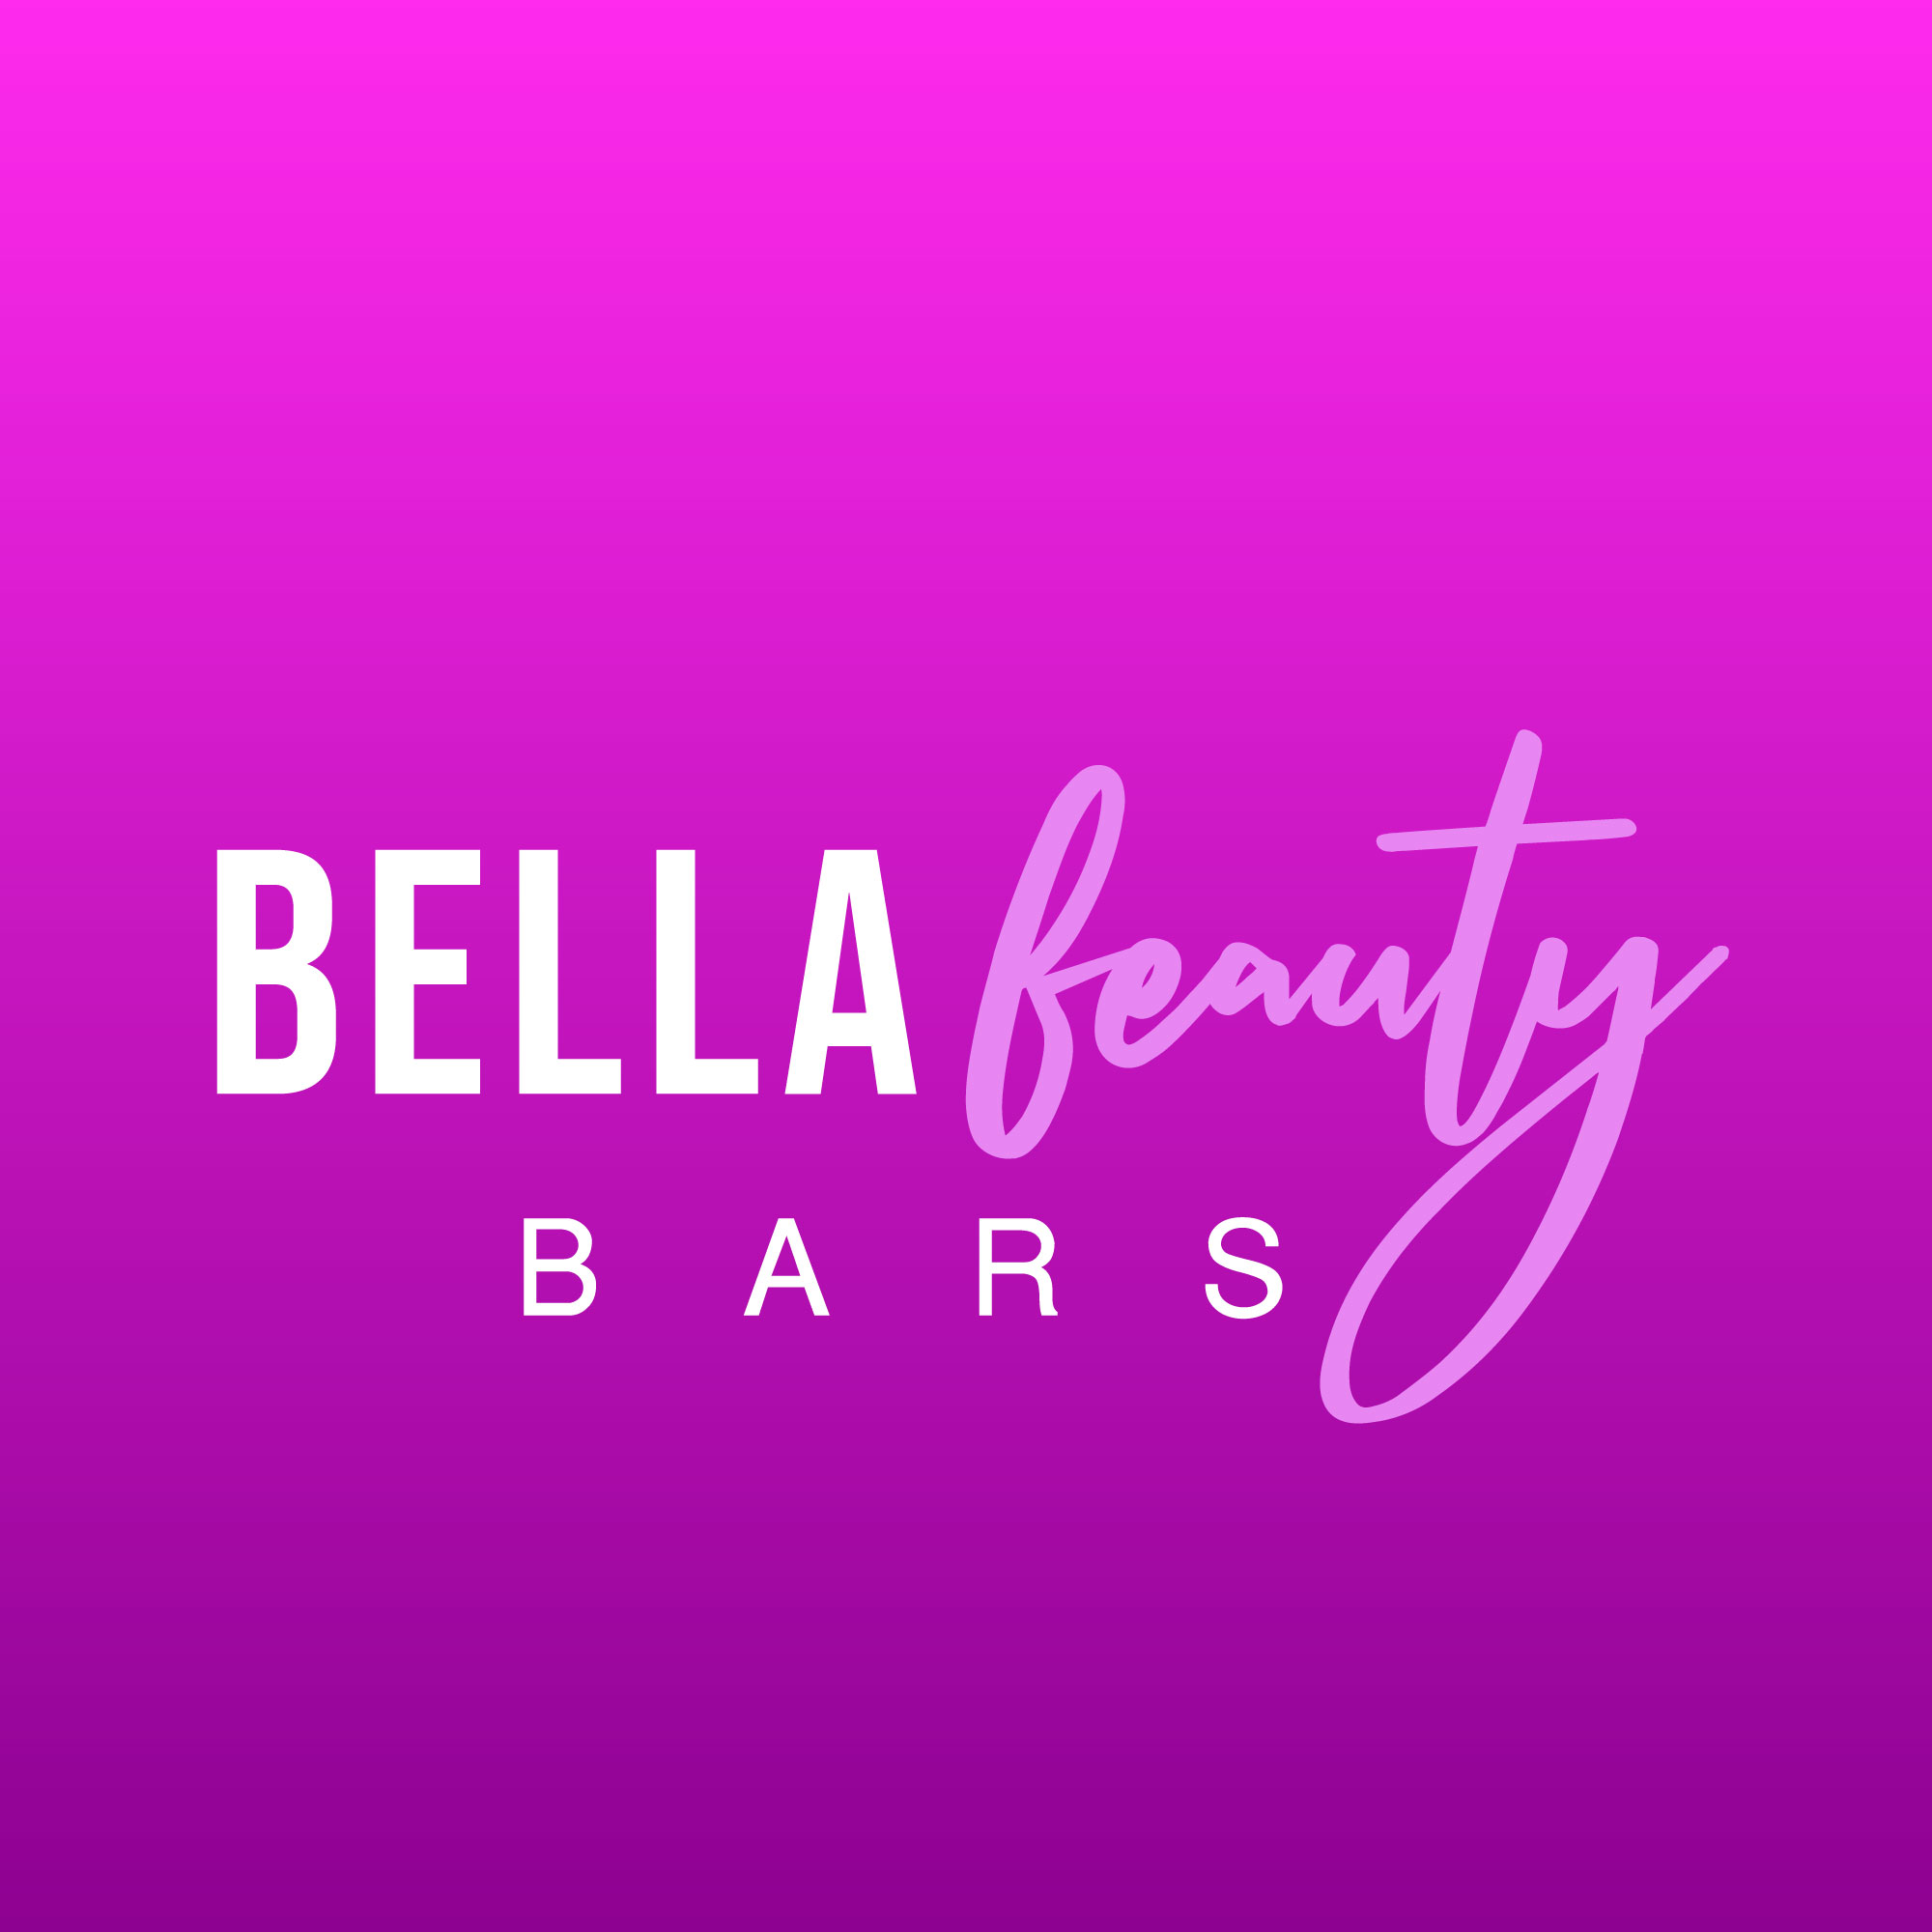 Bella Beauty Bars